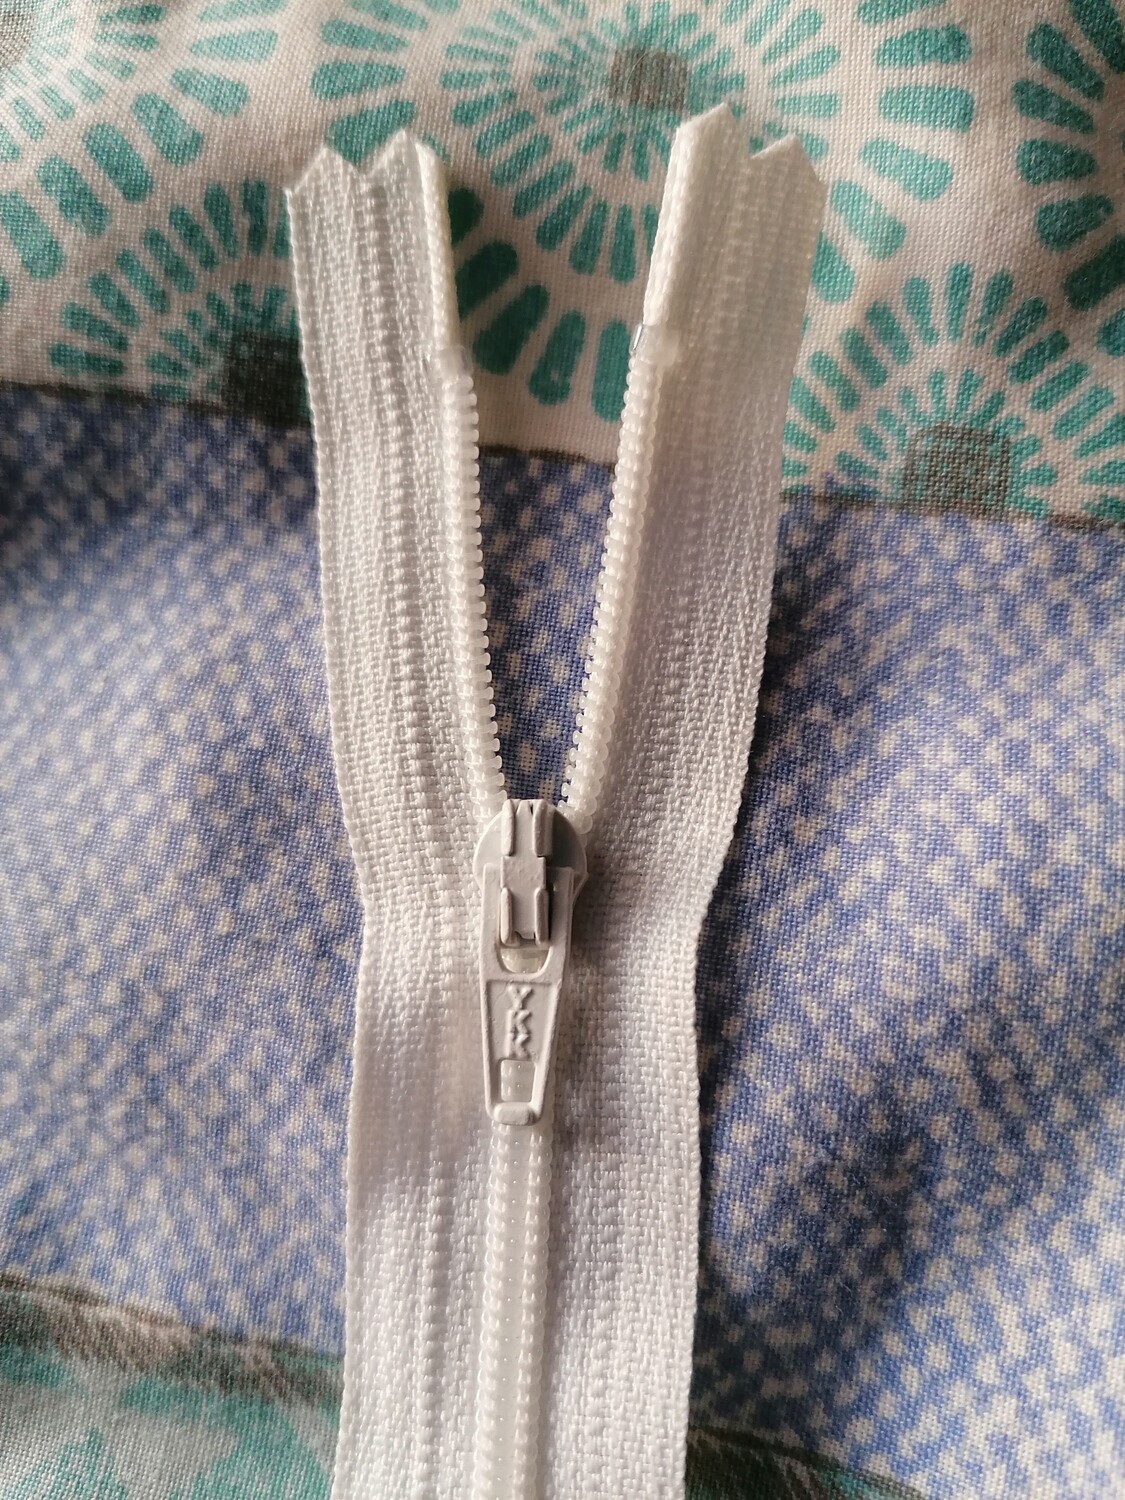 25cm (10") nylon closed end zip